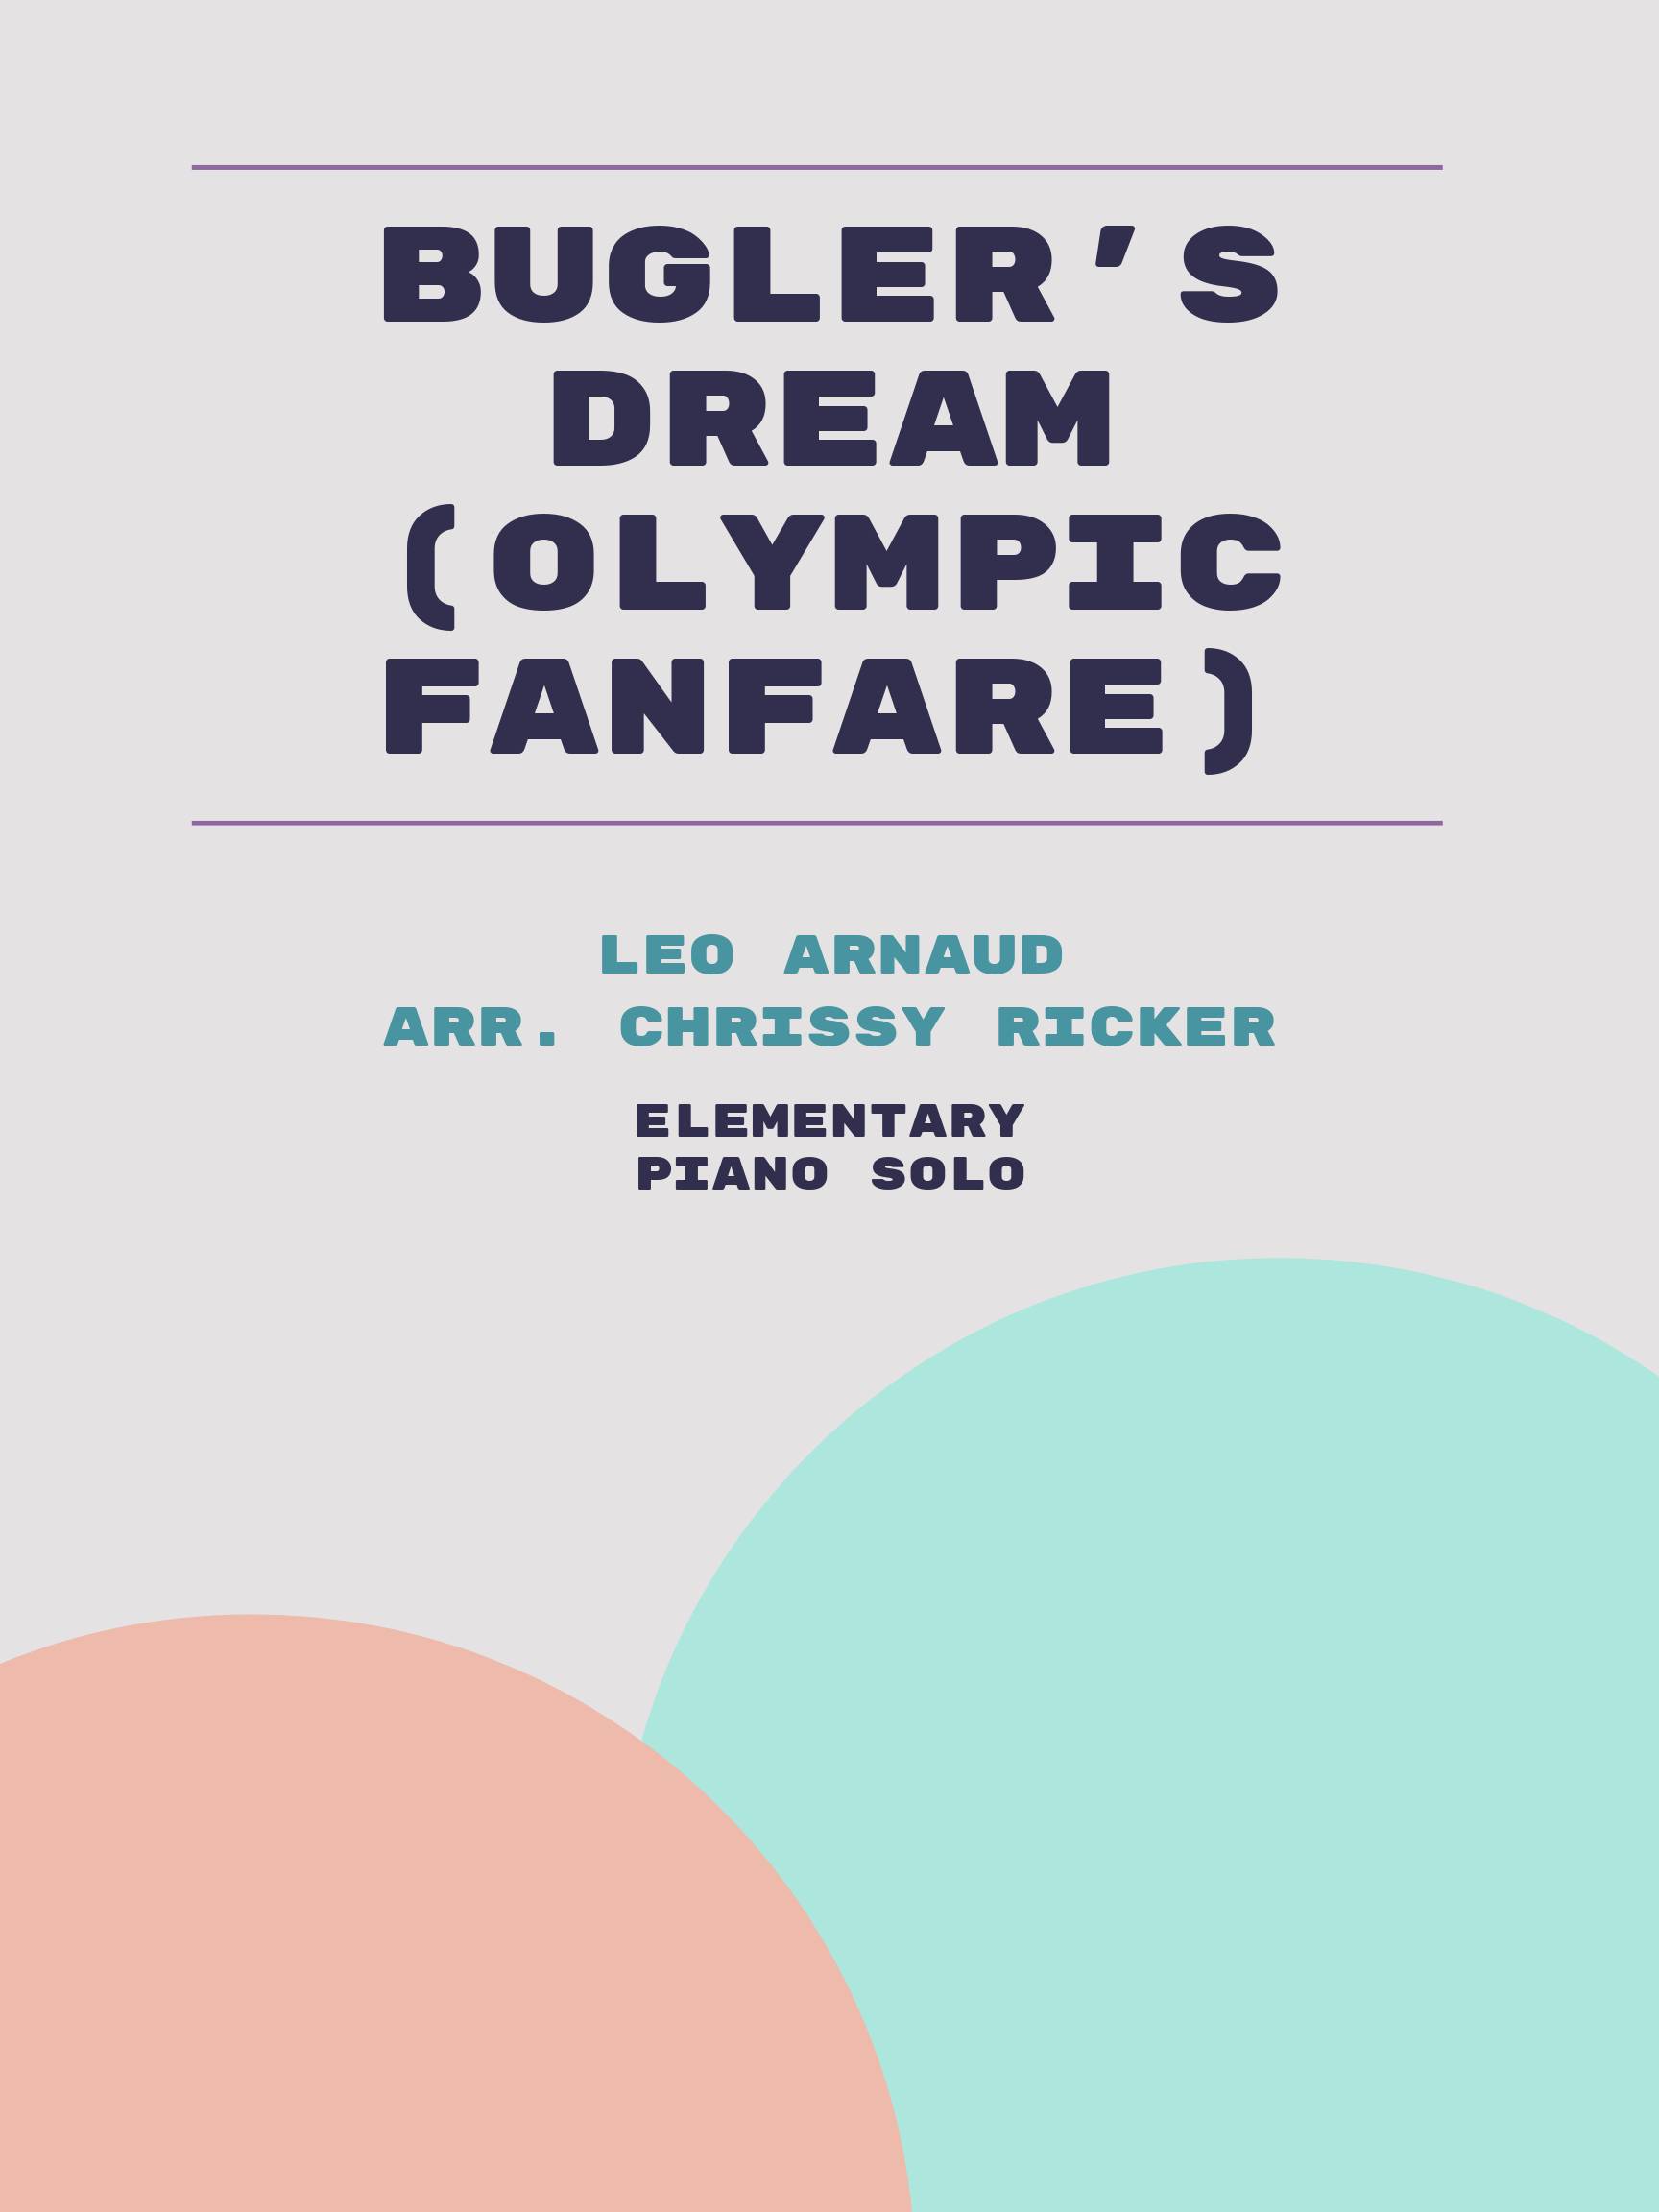 Bugler's Dream (Olympic Fanfare) by Leo Arnaud